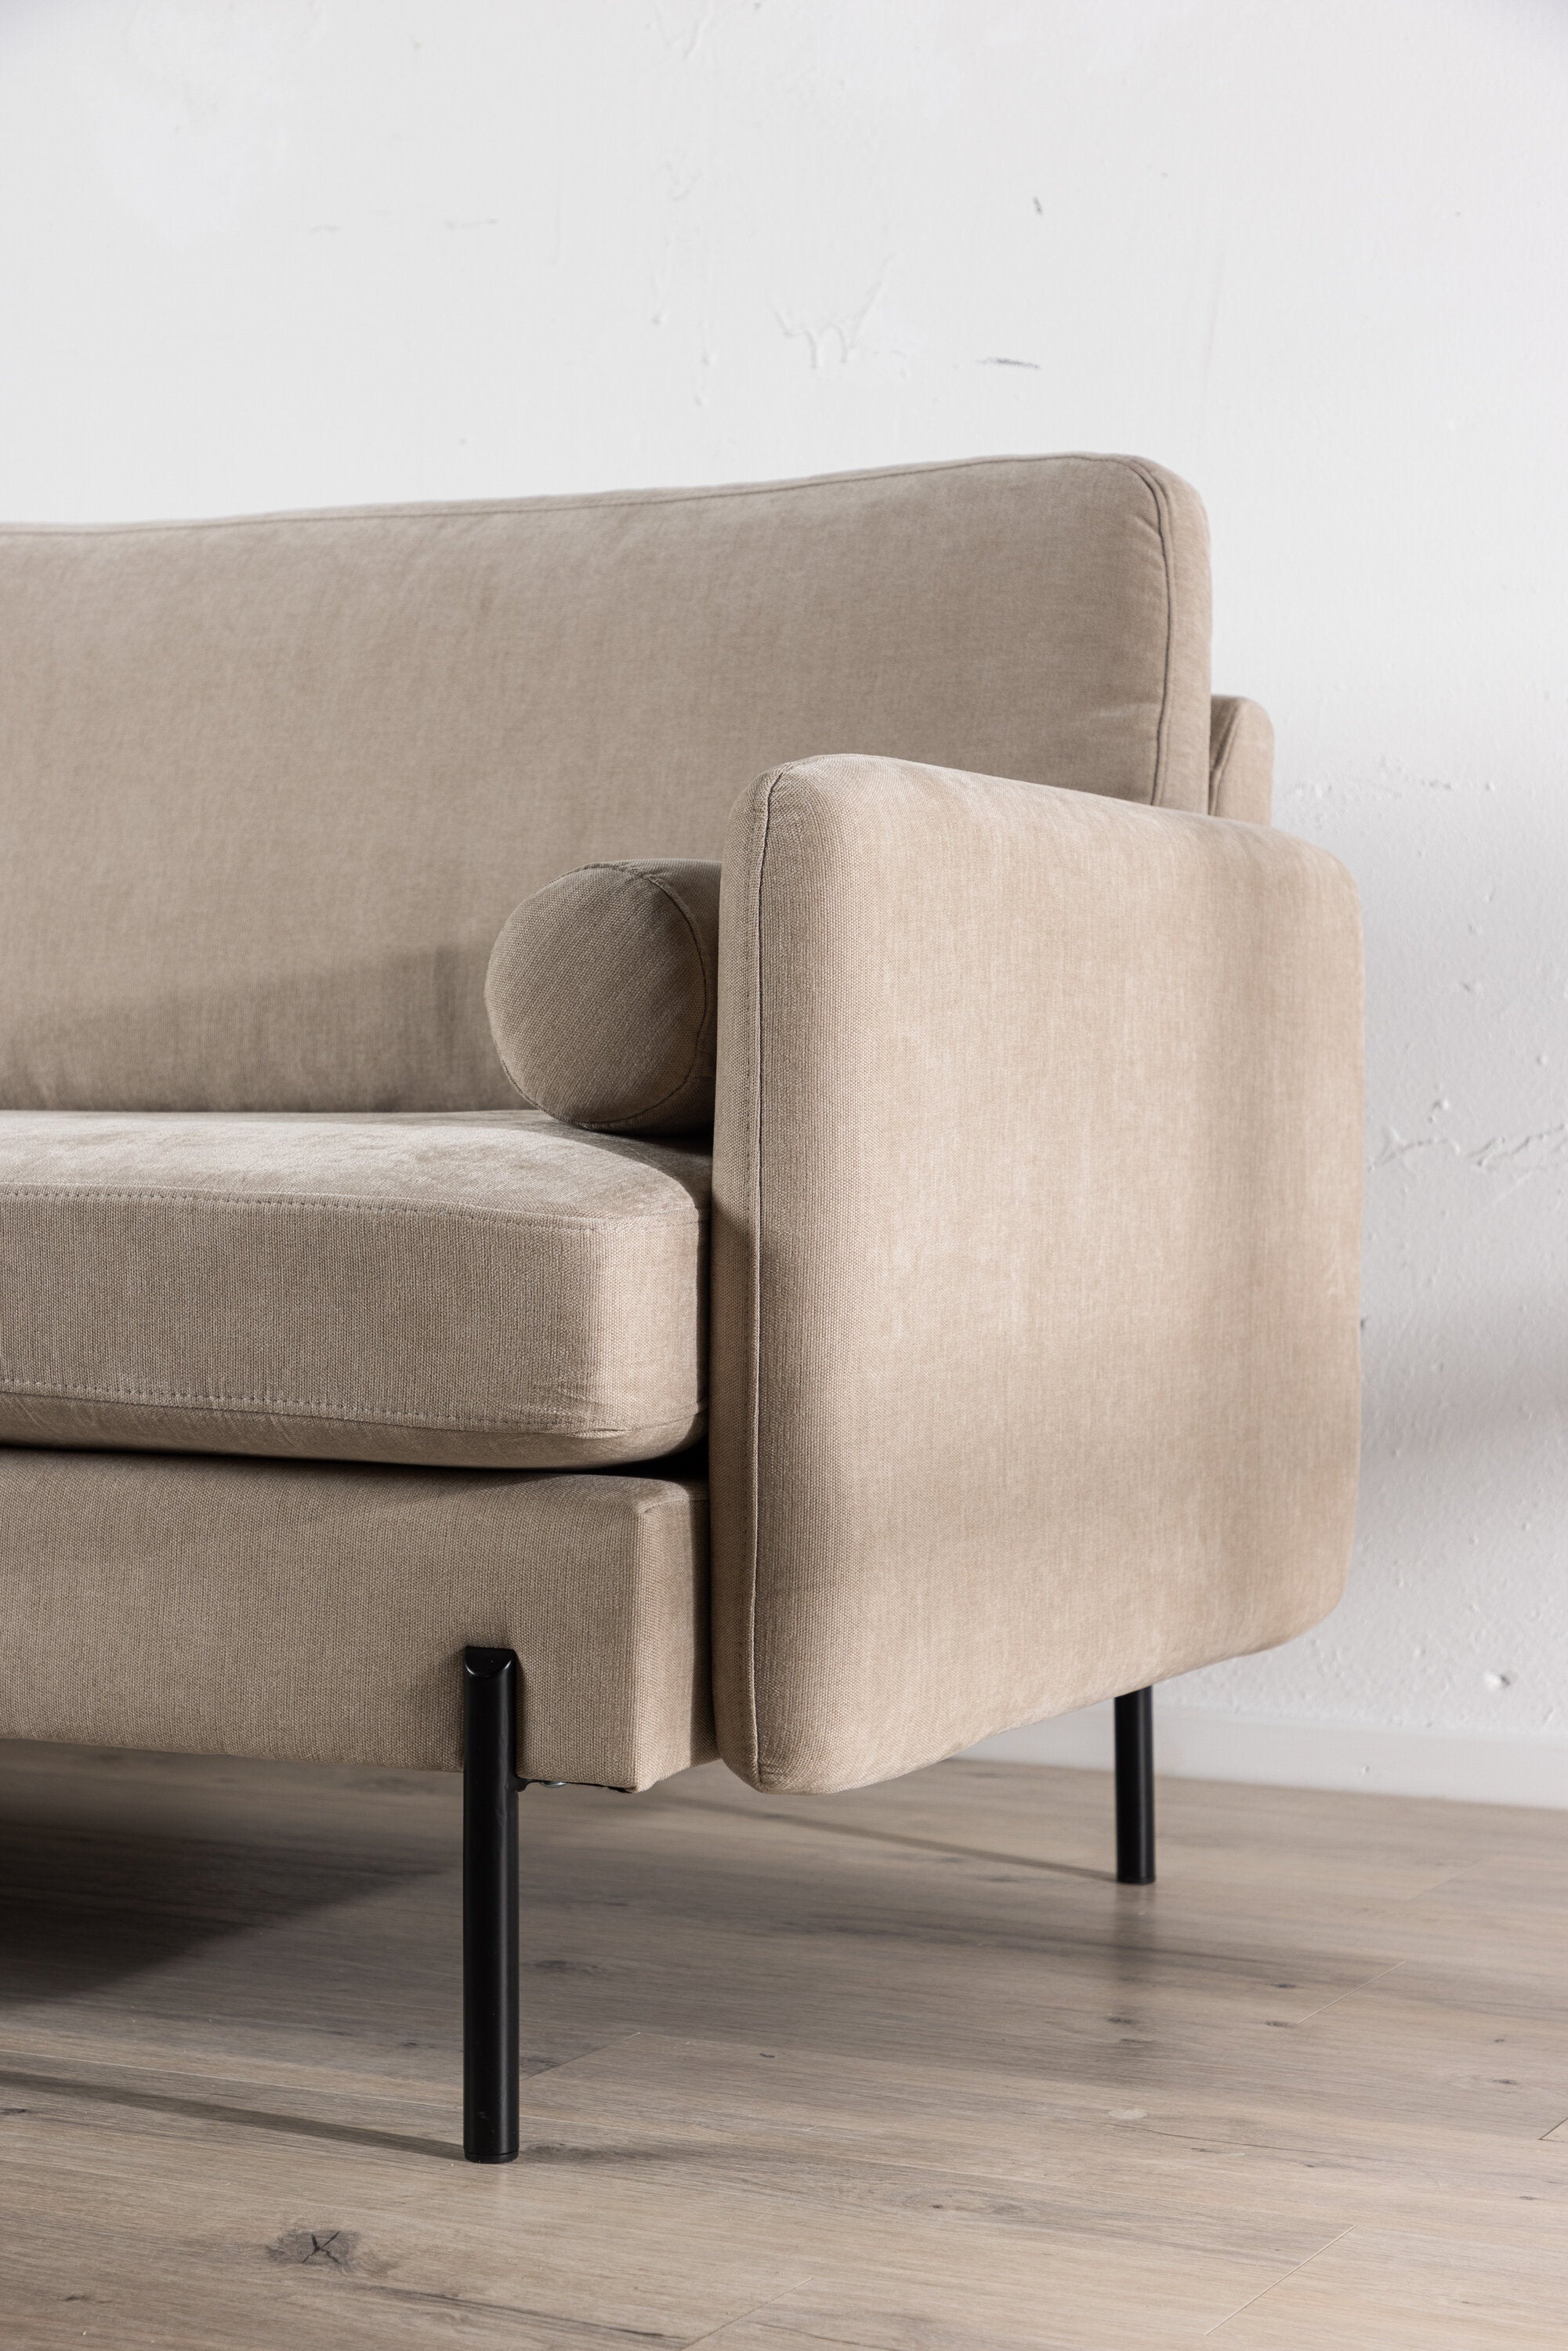 Antibes 2 Sitzer Sofa - KAQTU Design